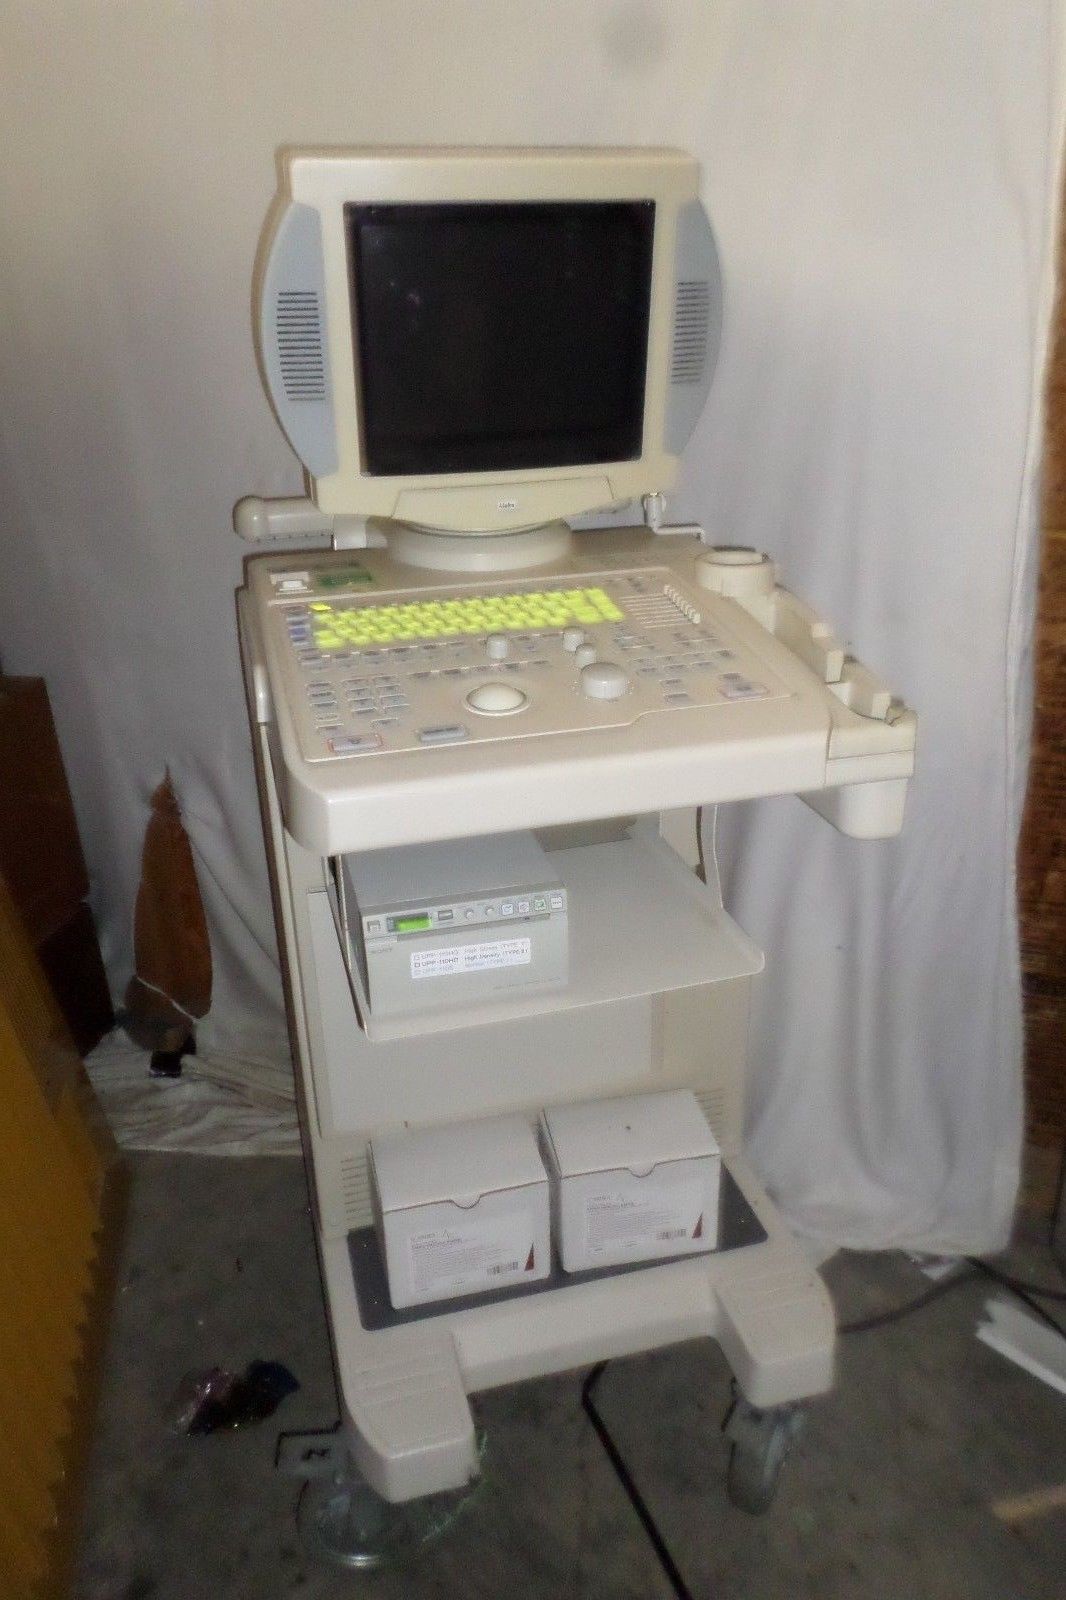 Aloka SSD-1400 Ultrasound No Probes DIAGNOSTIC ULTRASOUND MACHINES FOR SALE